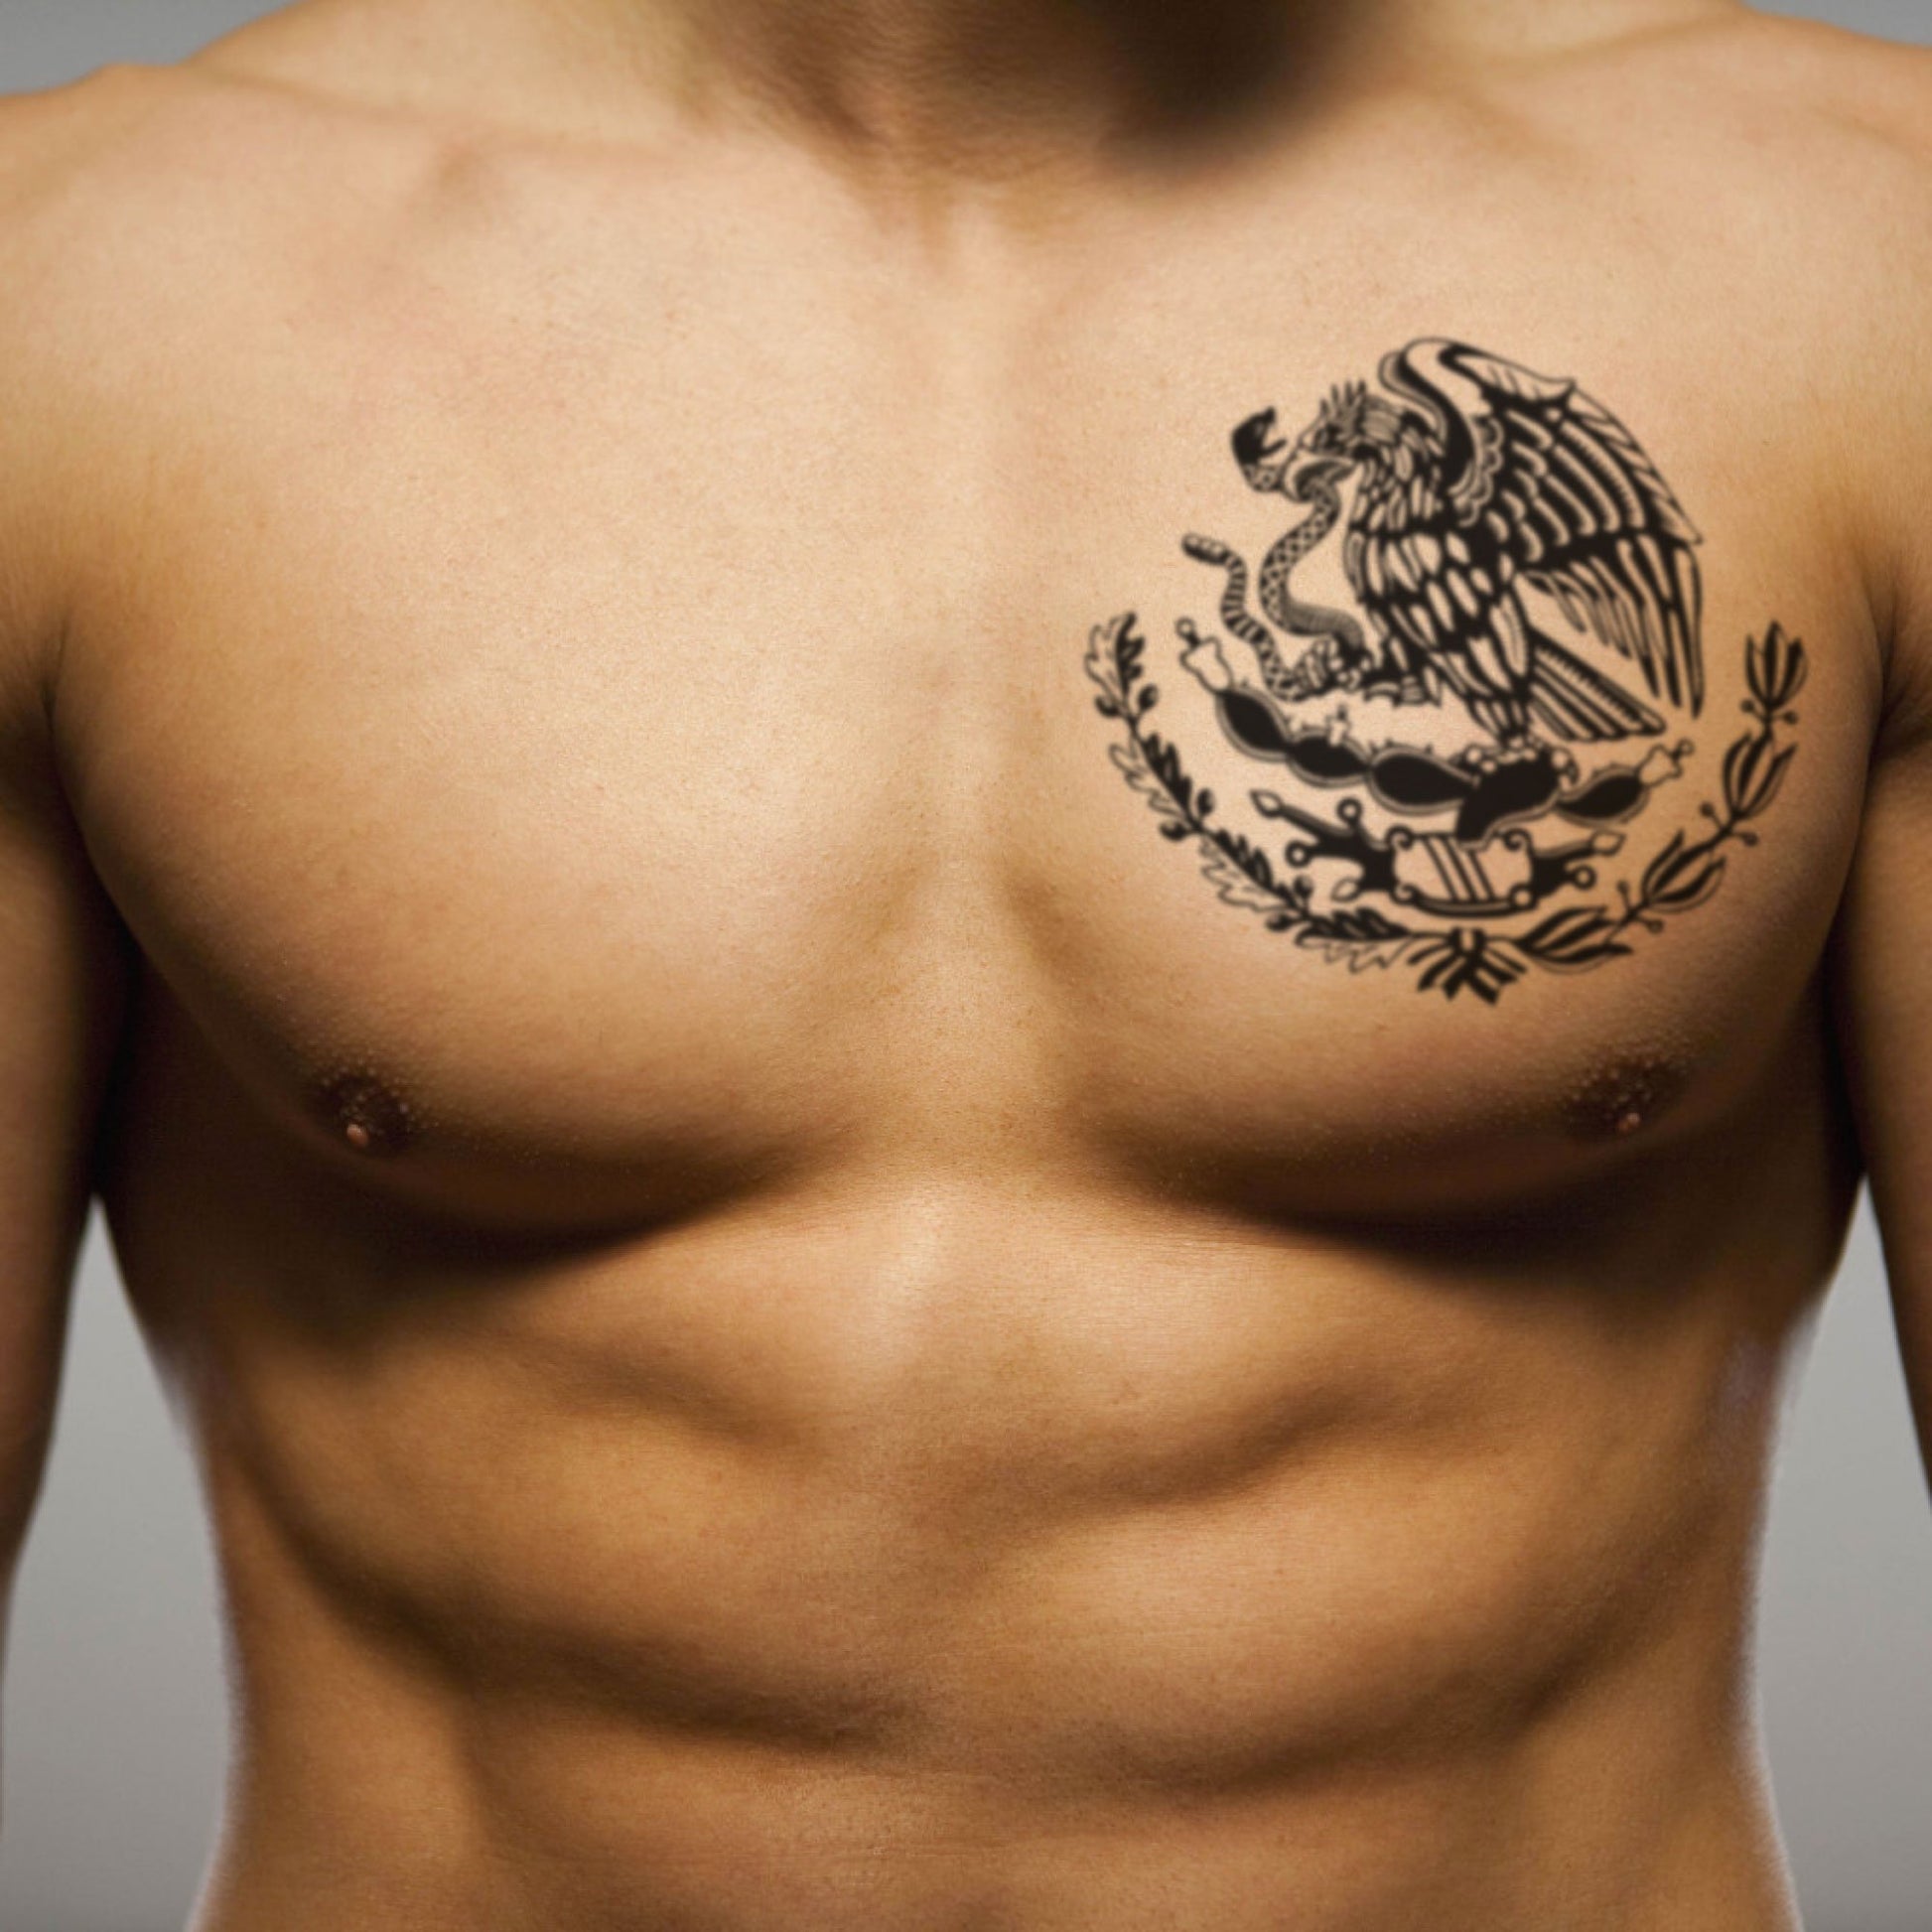 fake big mexican eagle flag pride aztec warrior mafia style pec pectoral muscular man nipple tribal temporary tattoo sticker design idea on chest